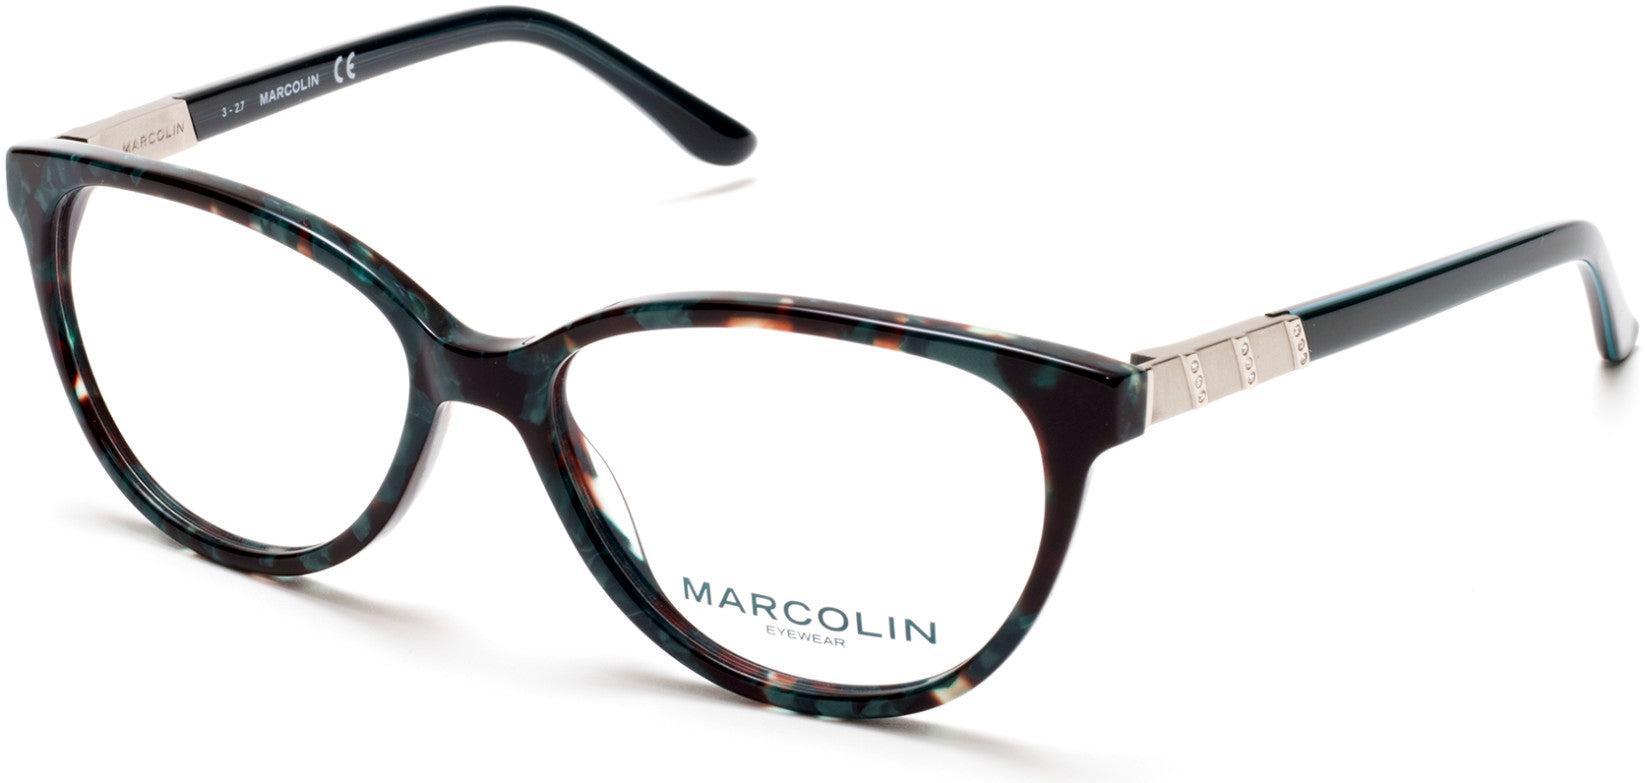 Marcolin MA5012 Cat Eyeglasses 089-089 - Turquoise